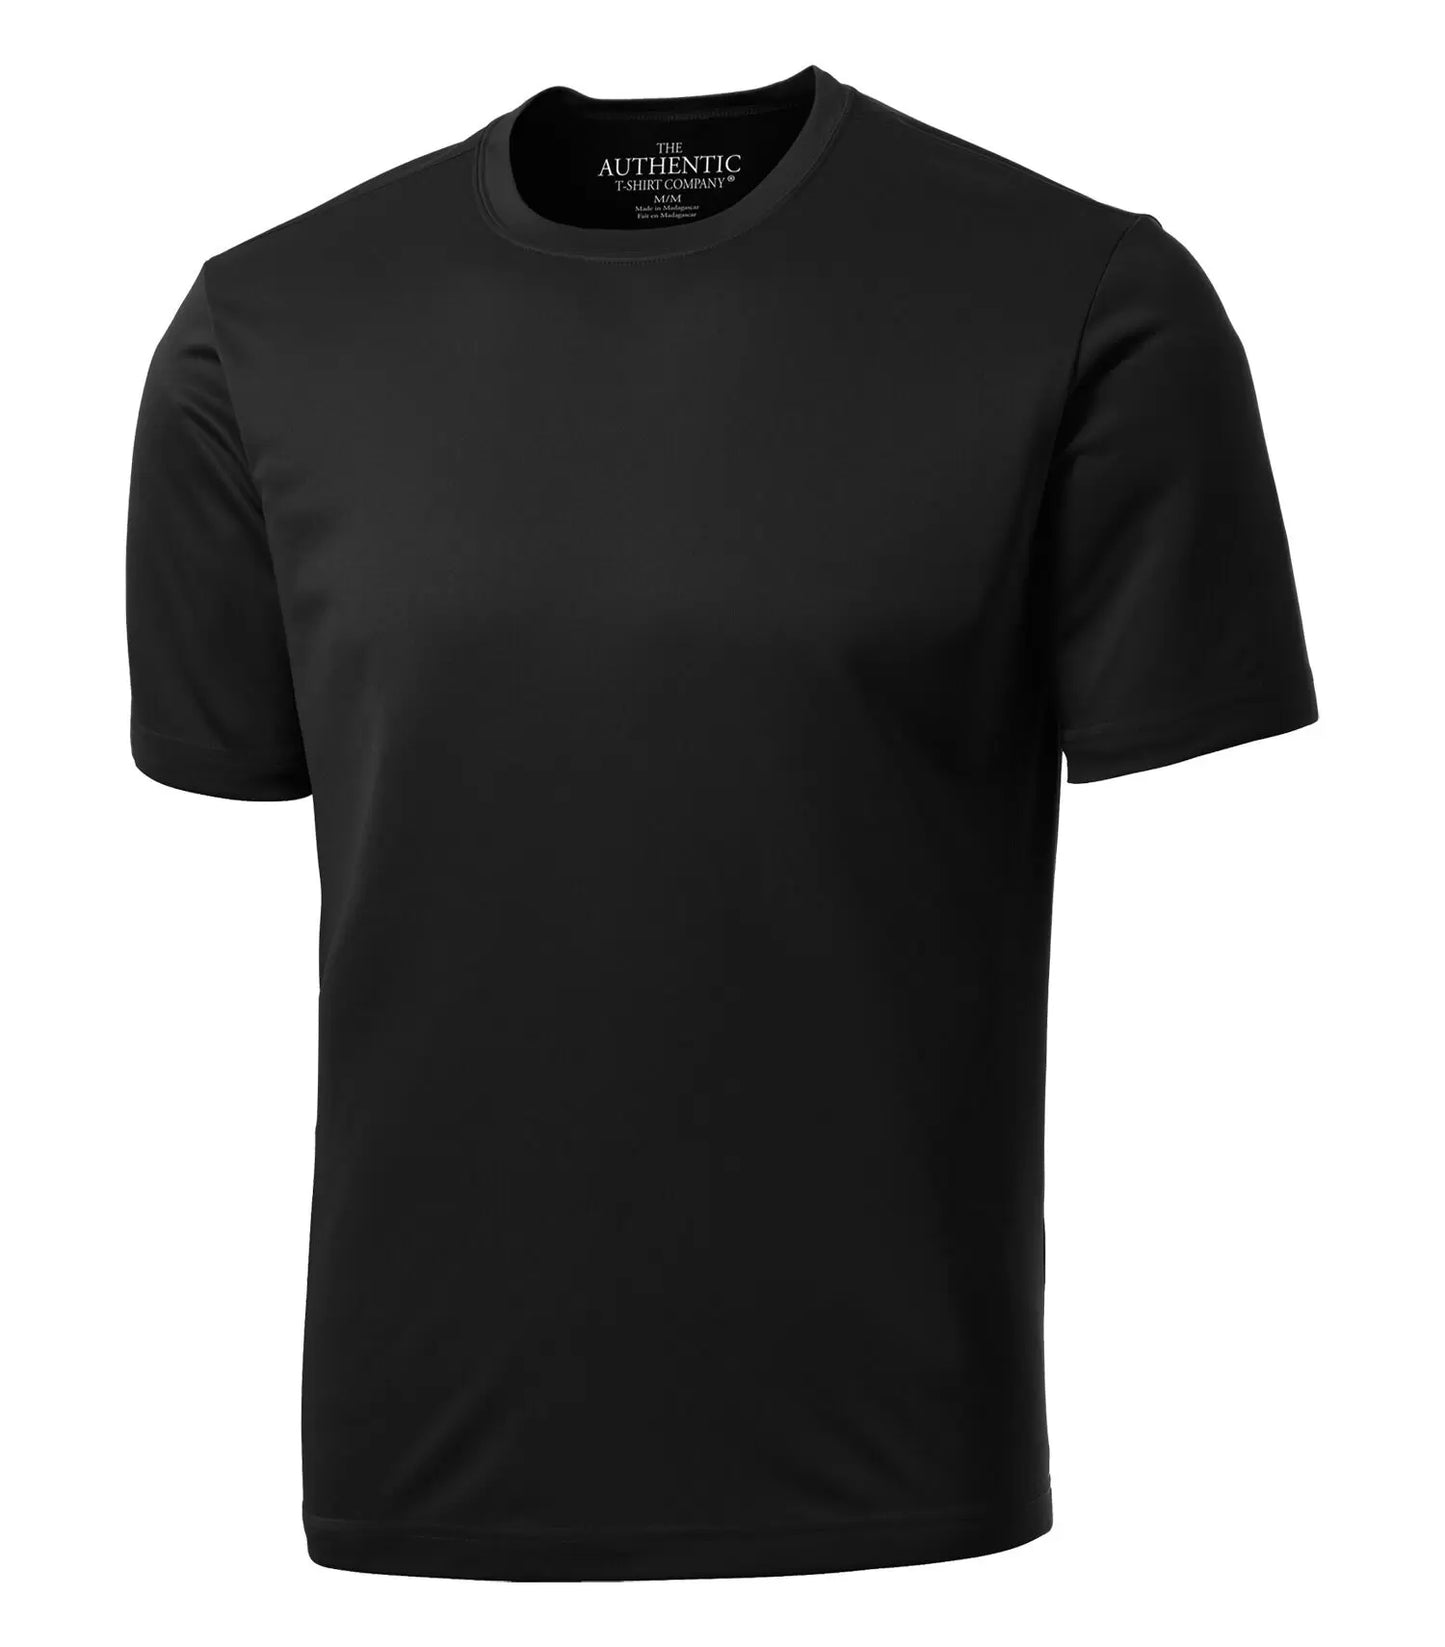 Adult Men's Athletic T-Shirt /w Gladiator Logo